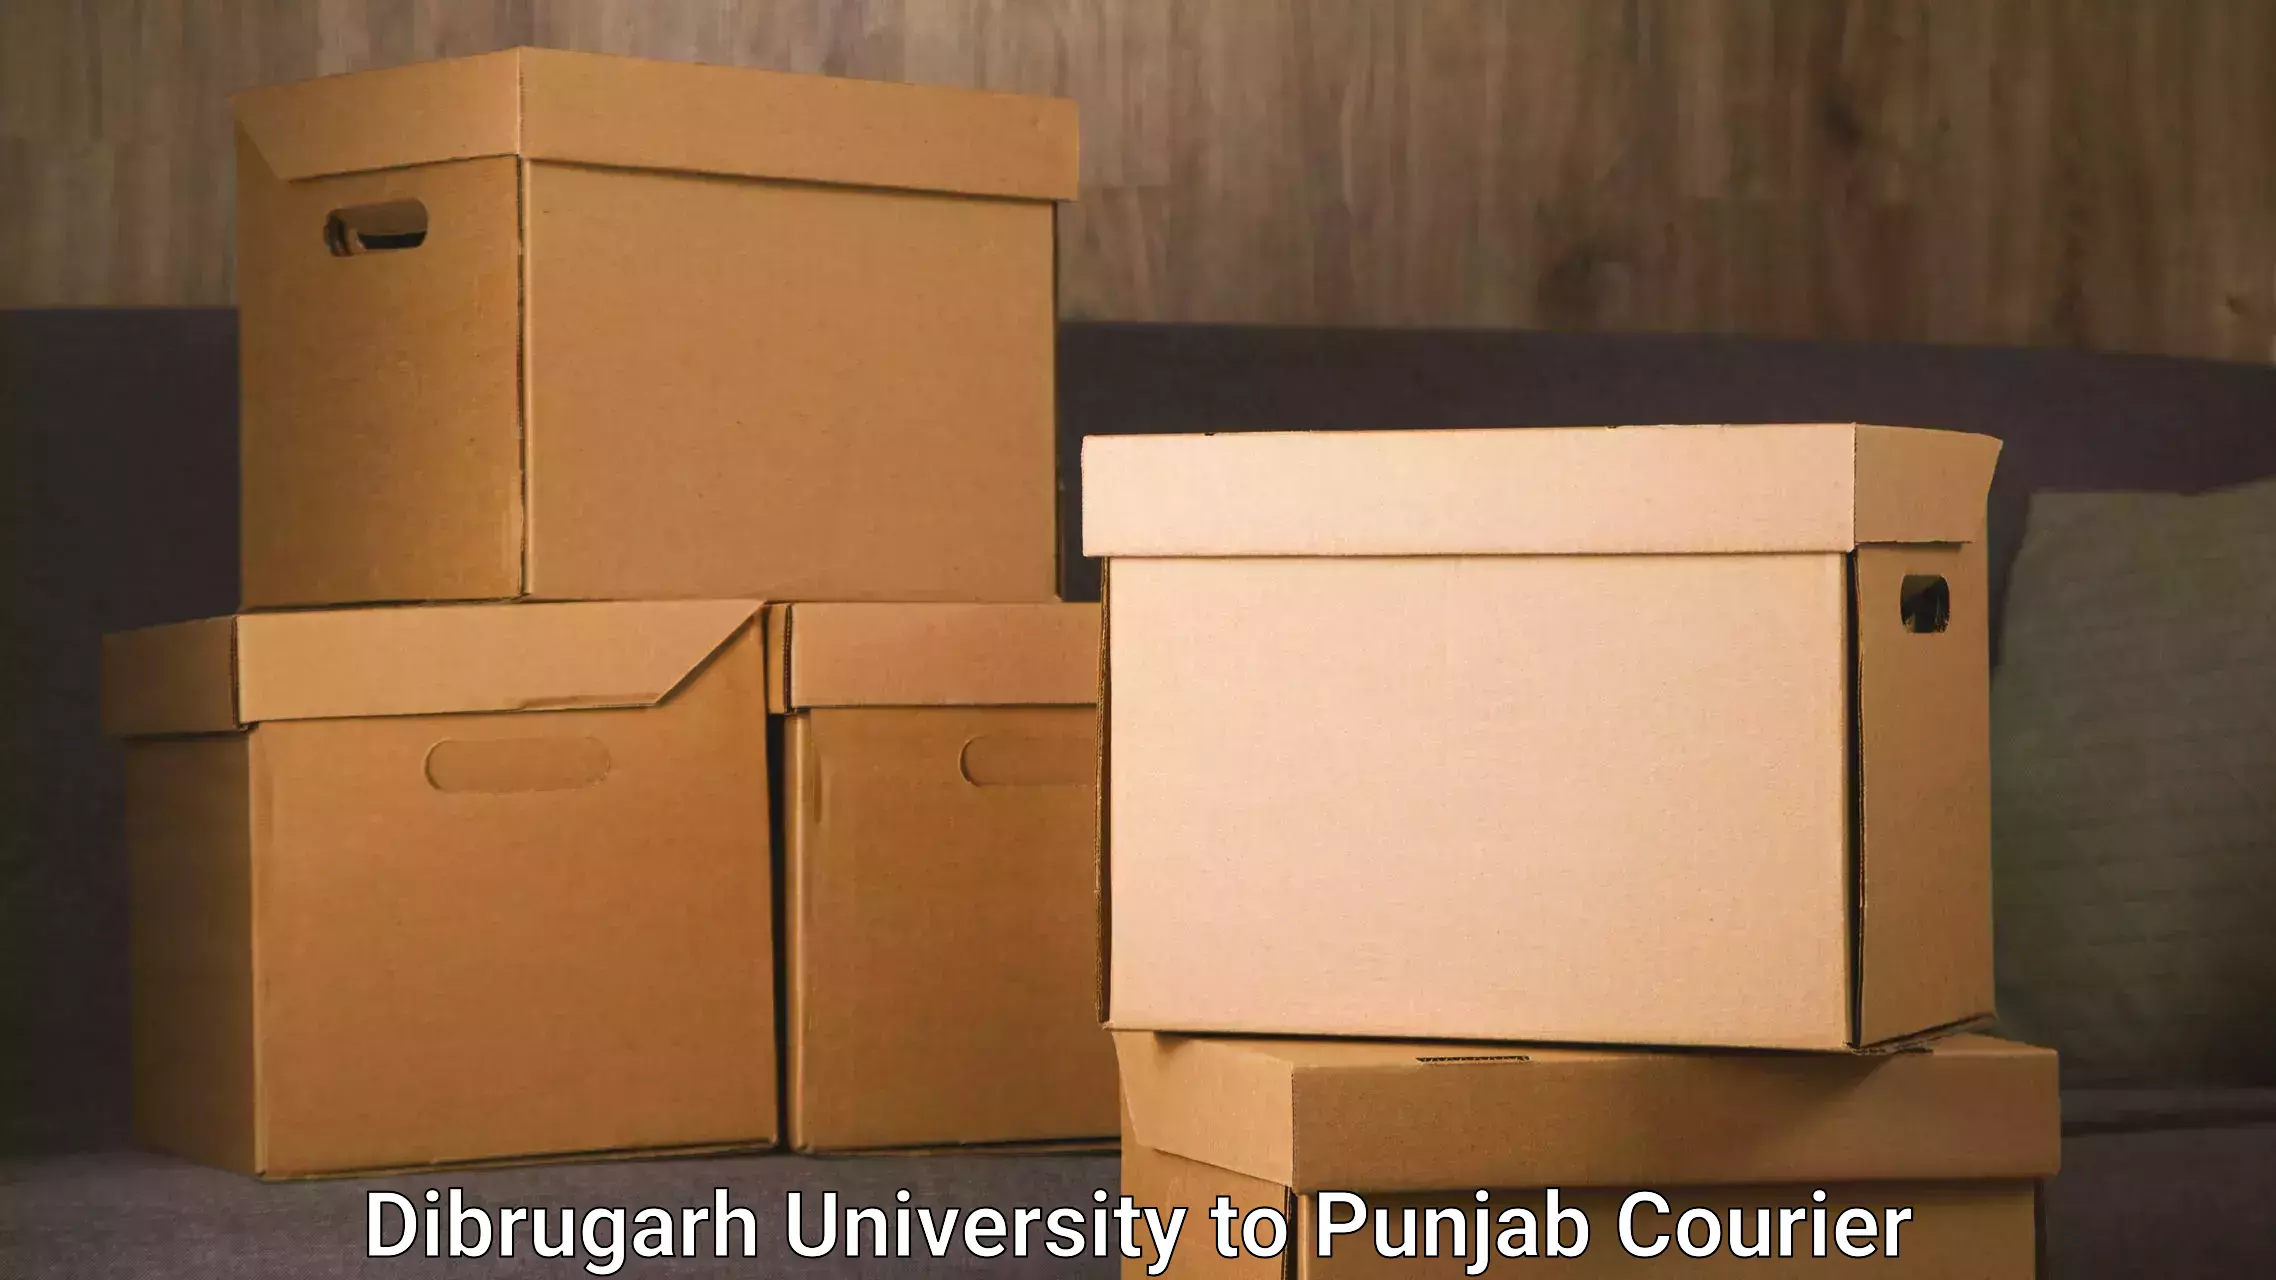 Reliable parcel services Dibrugarh University to Zirakpur